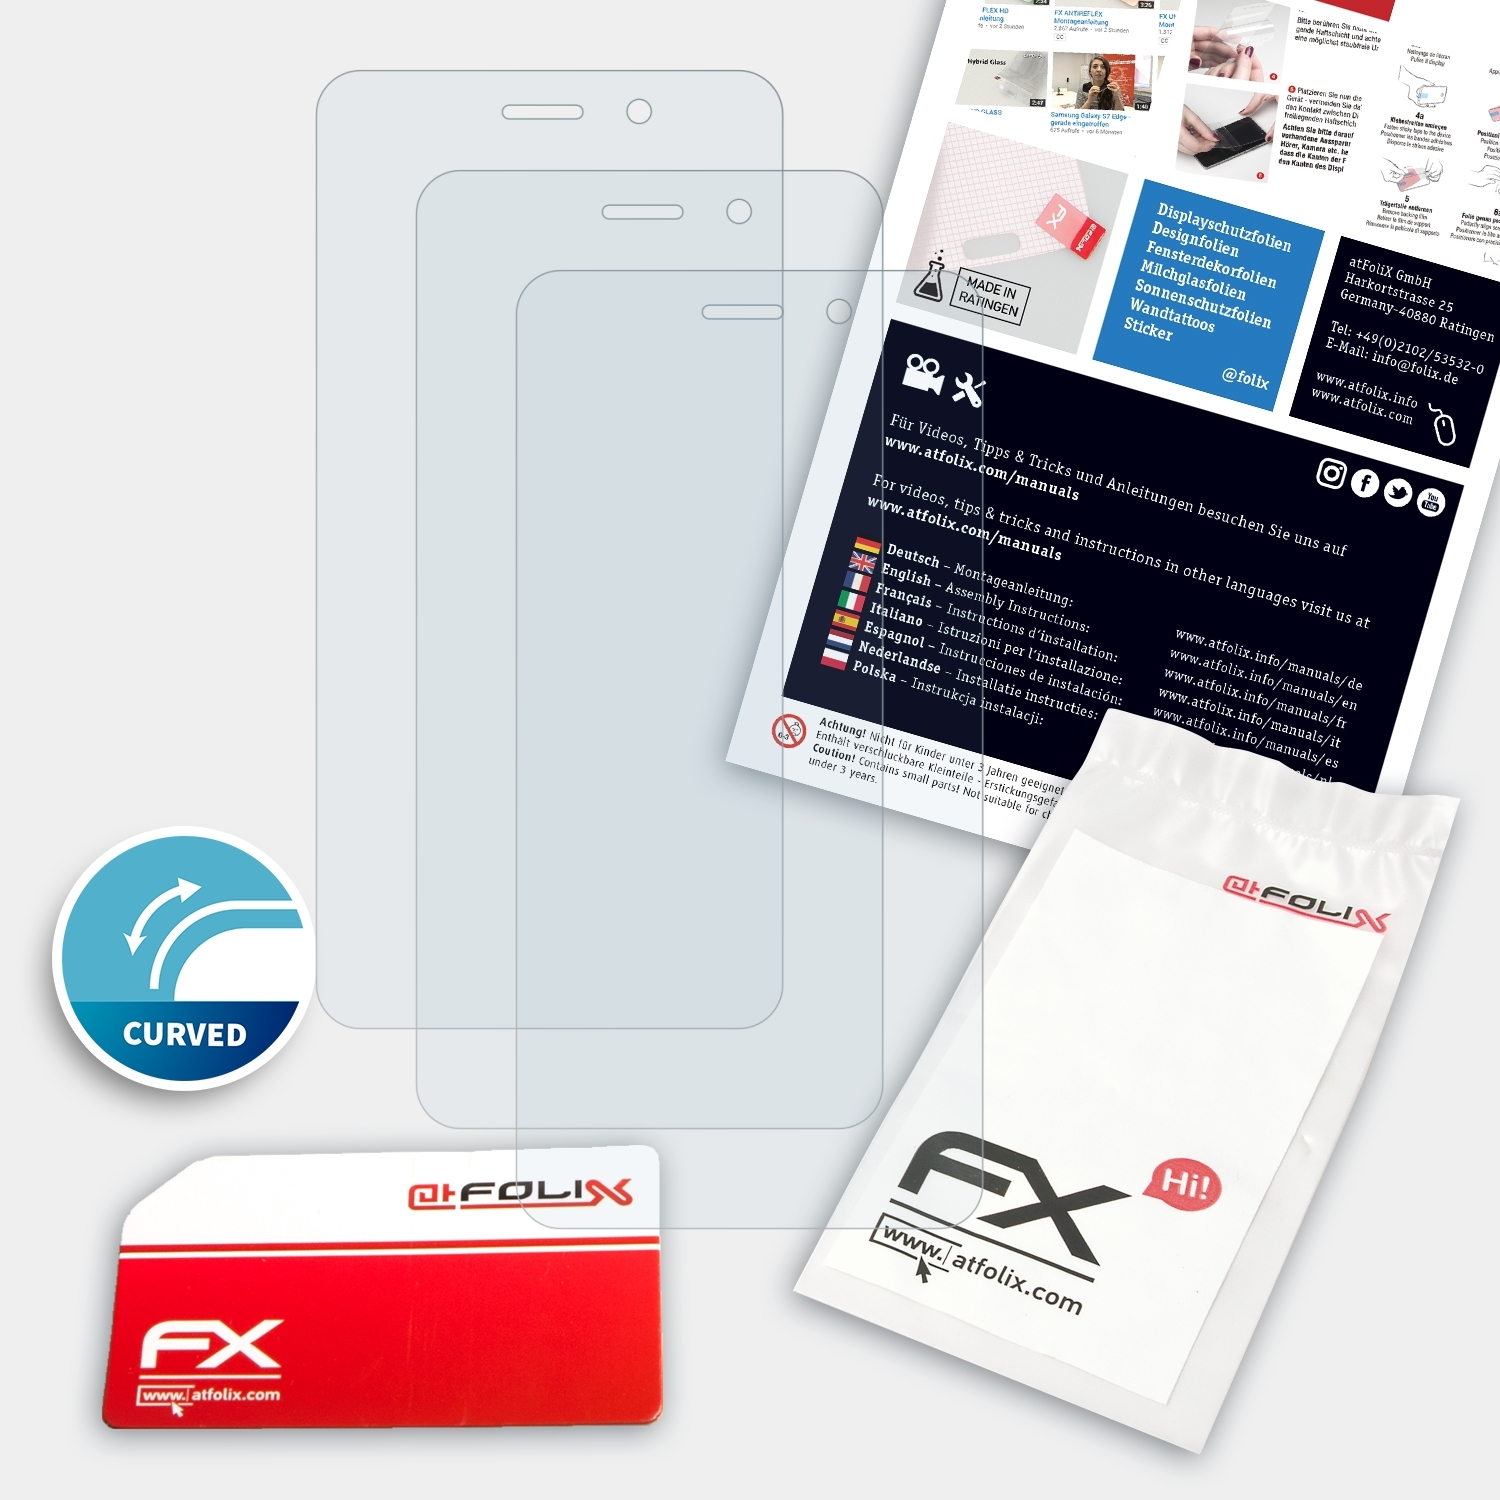 ATFOLIX 3x FX-ActiFleX P9 Displayschutz(für Energy Allview mini)